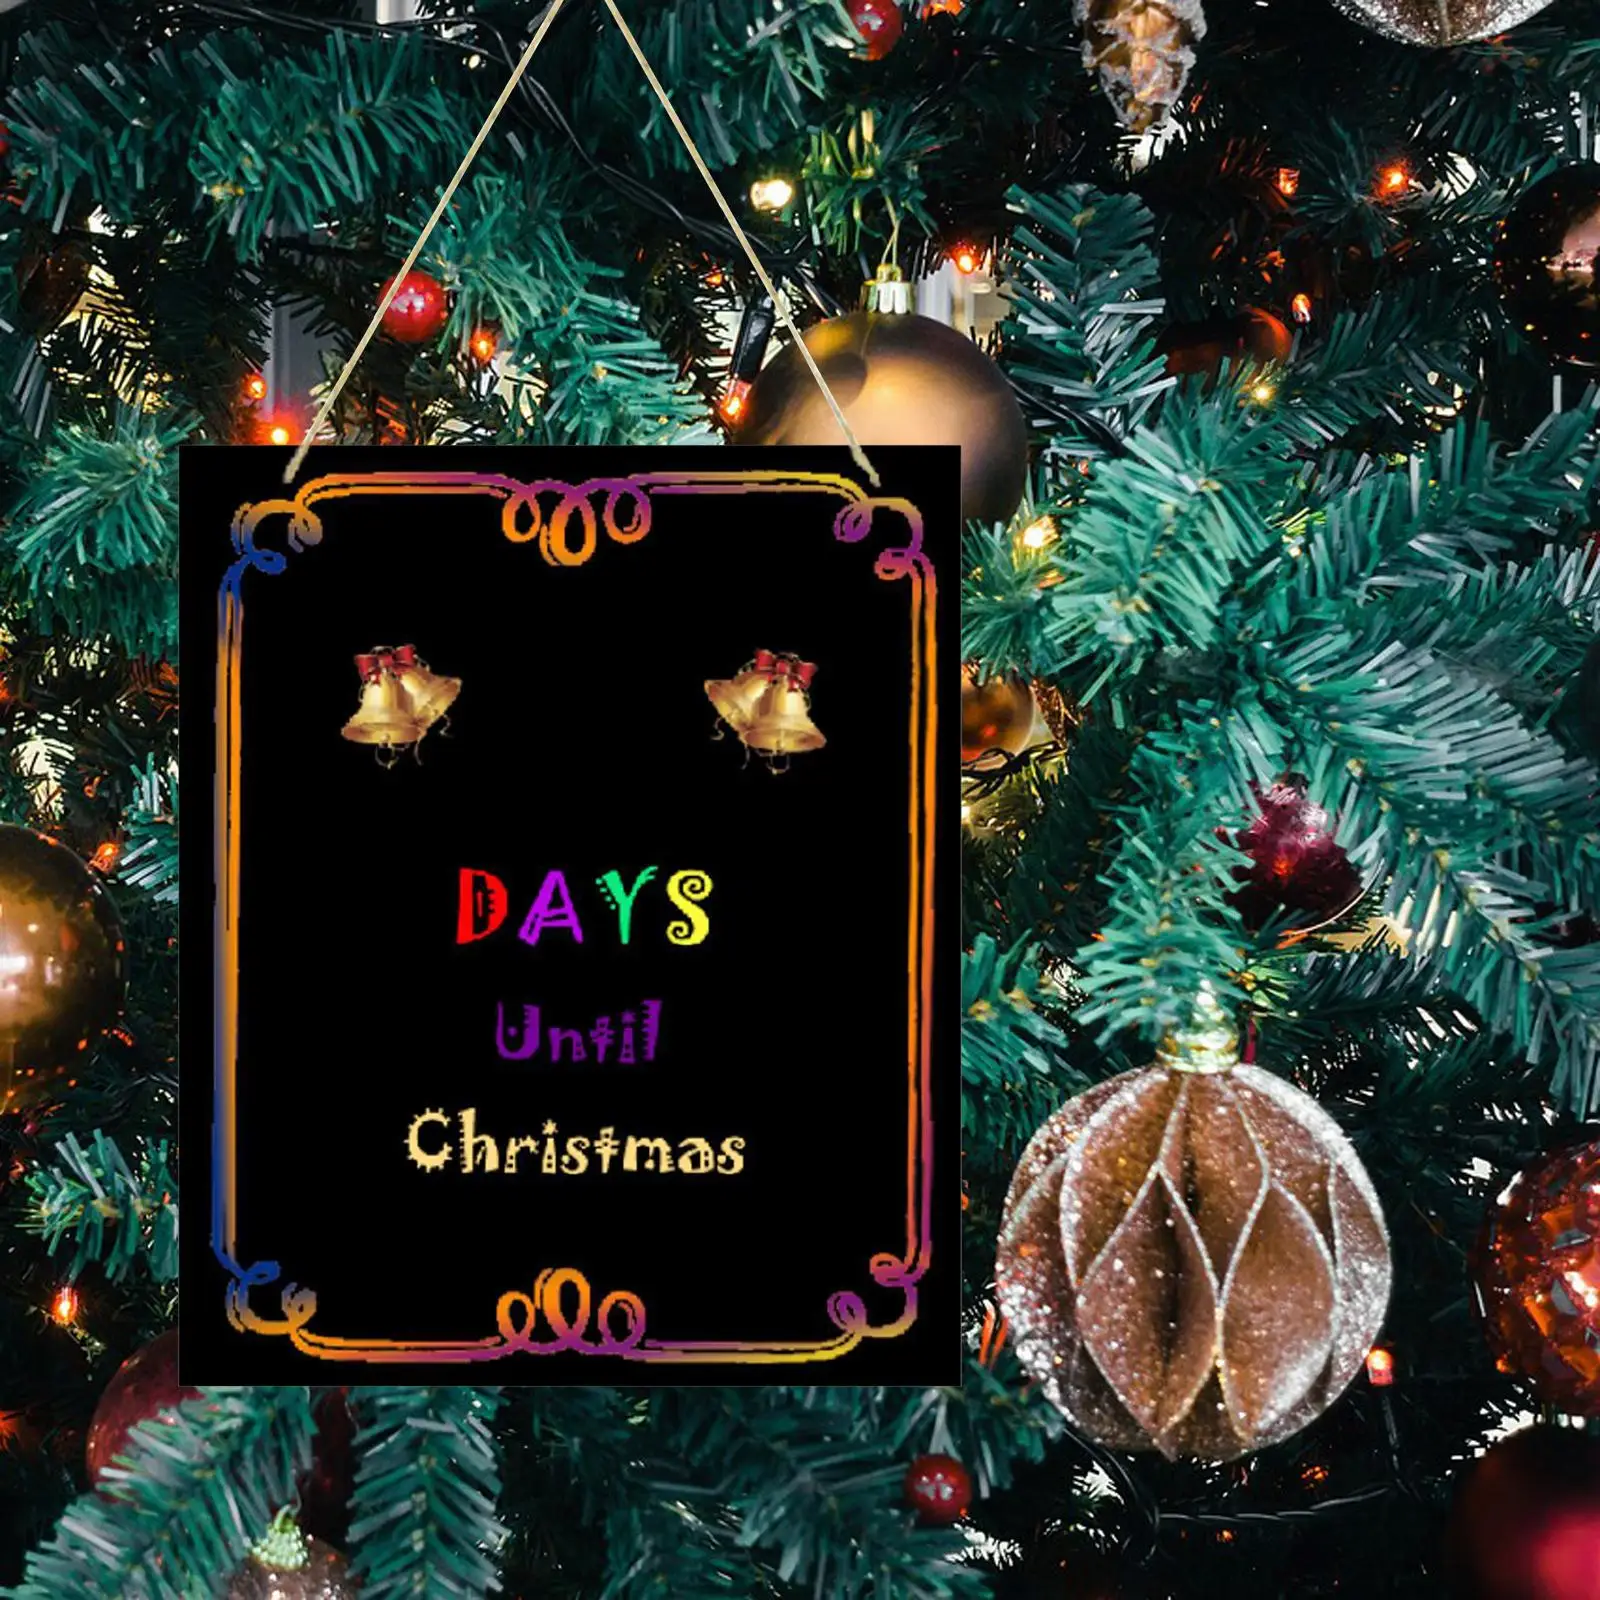 Advent Calendar Blackboard Christmas Chalkboard Ornament for Special Event